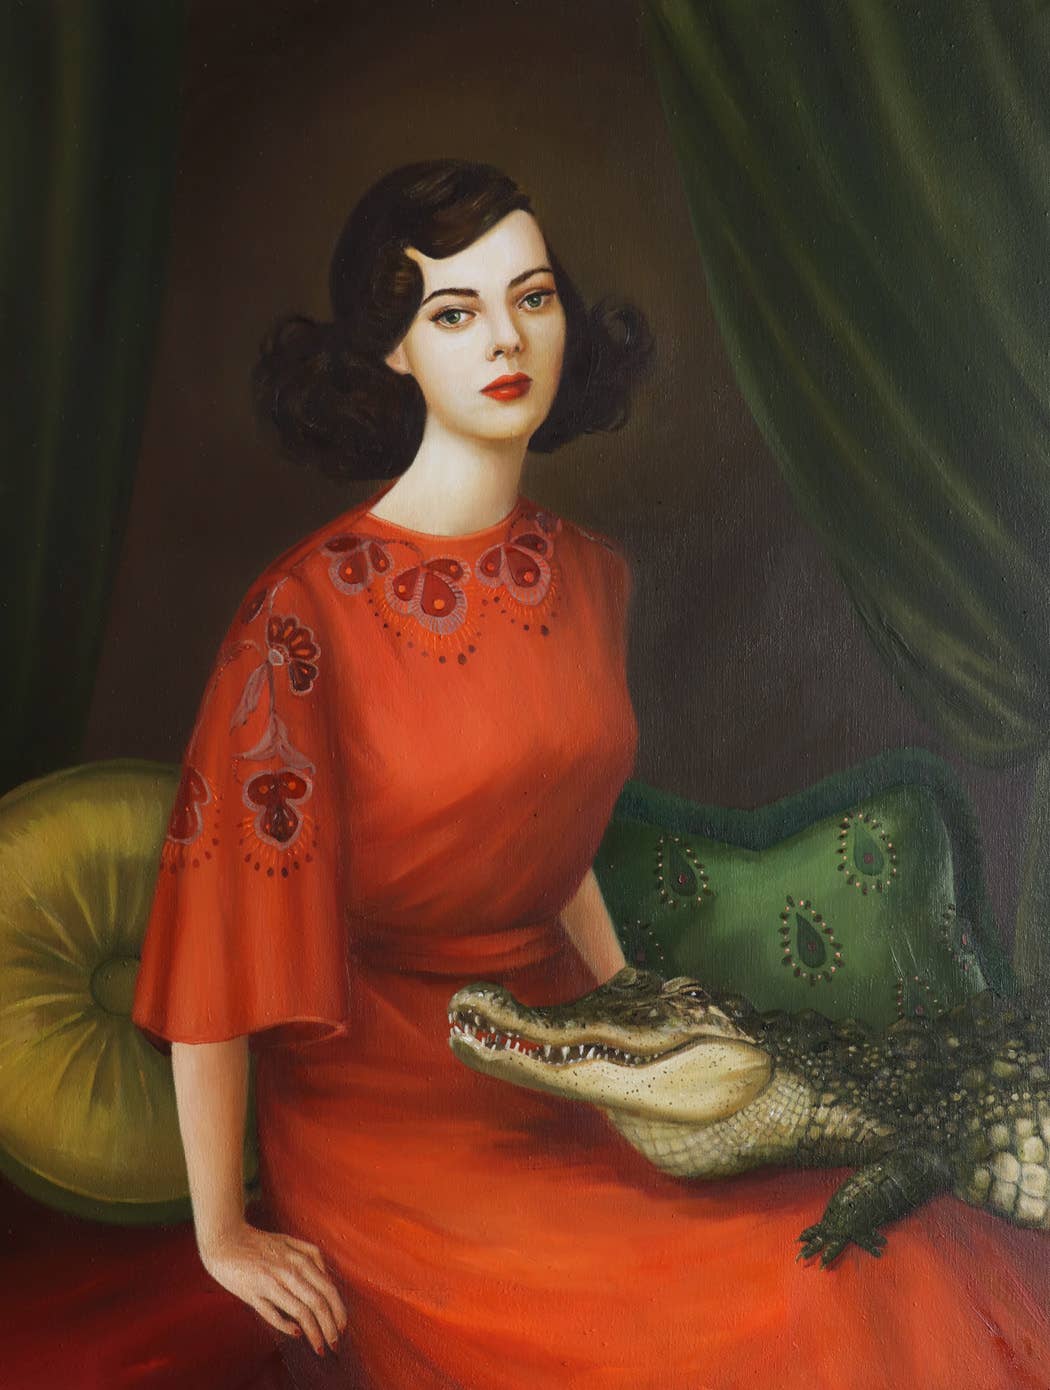 Woman with alligator art print